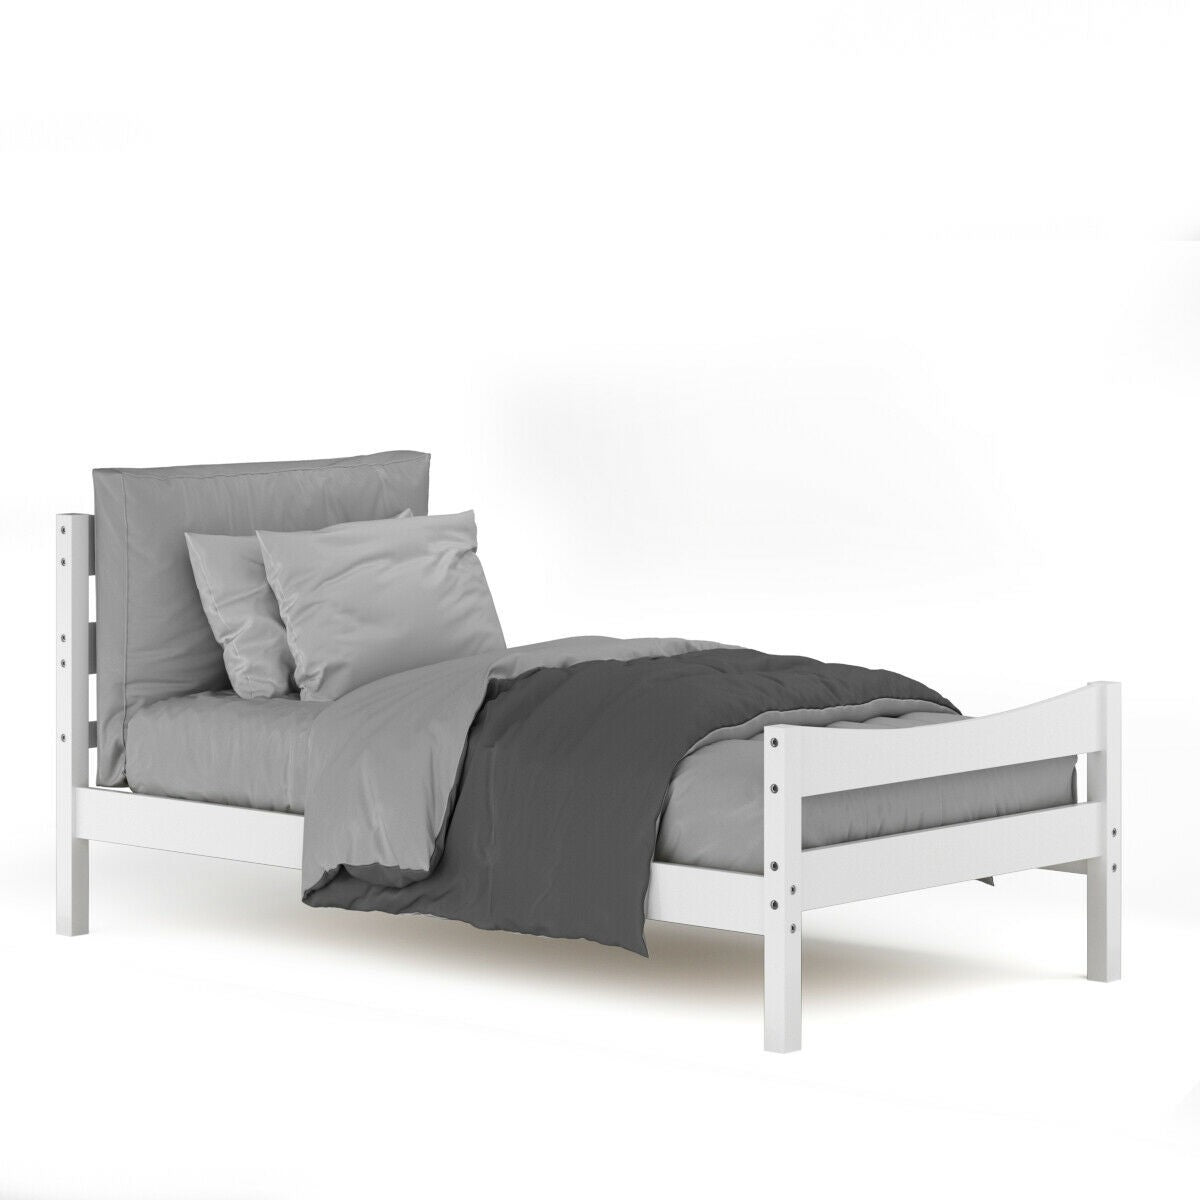 Available Under-bed Storage Twin Size Foundation Slat Support Platform Bed Frame